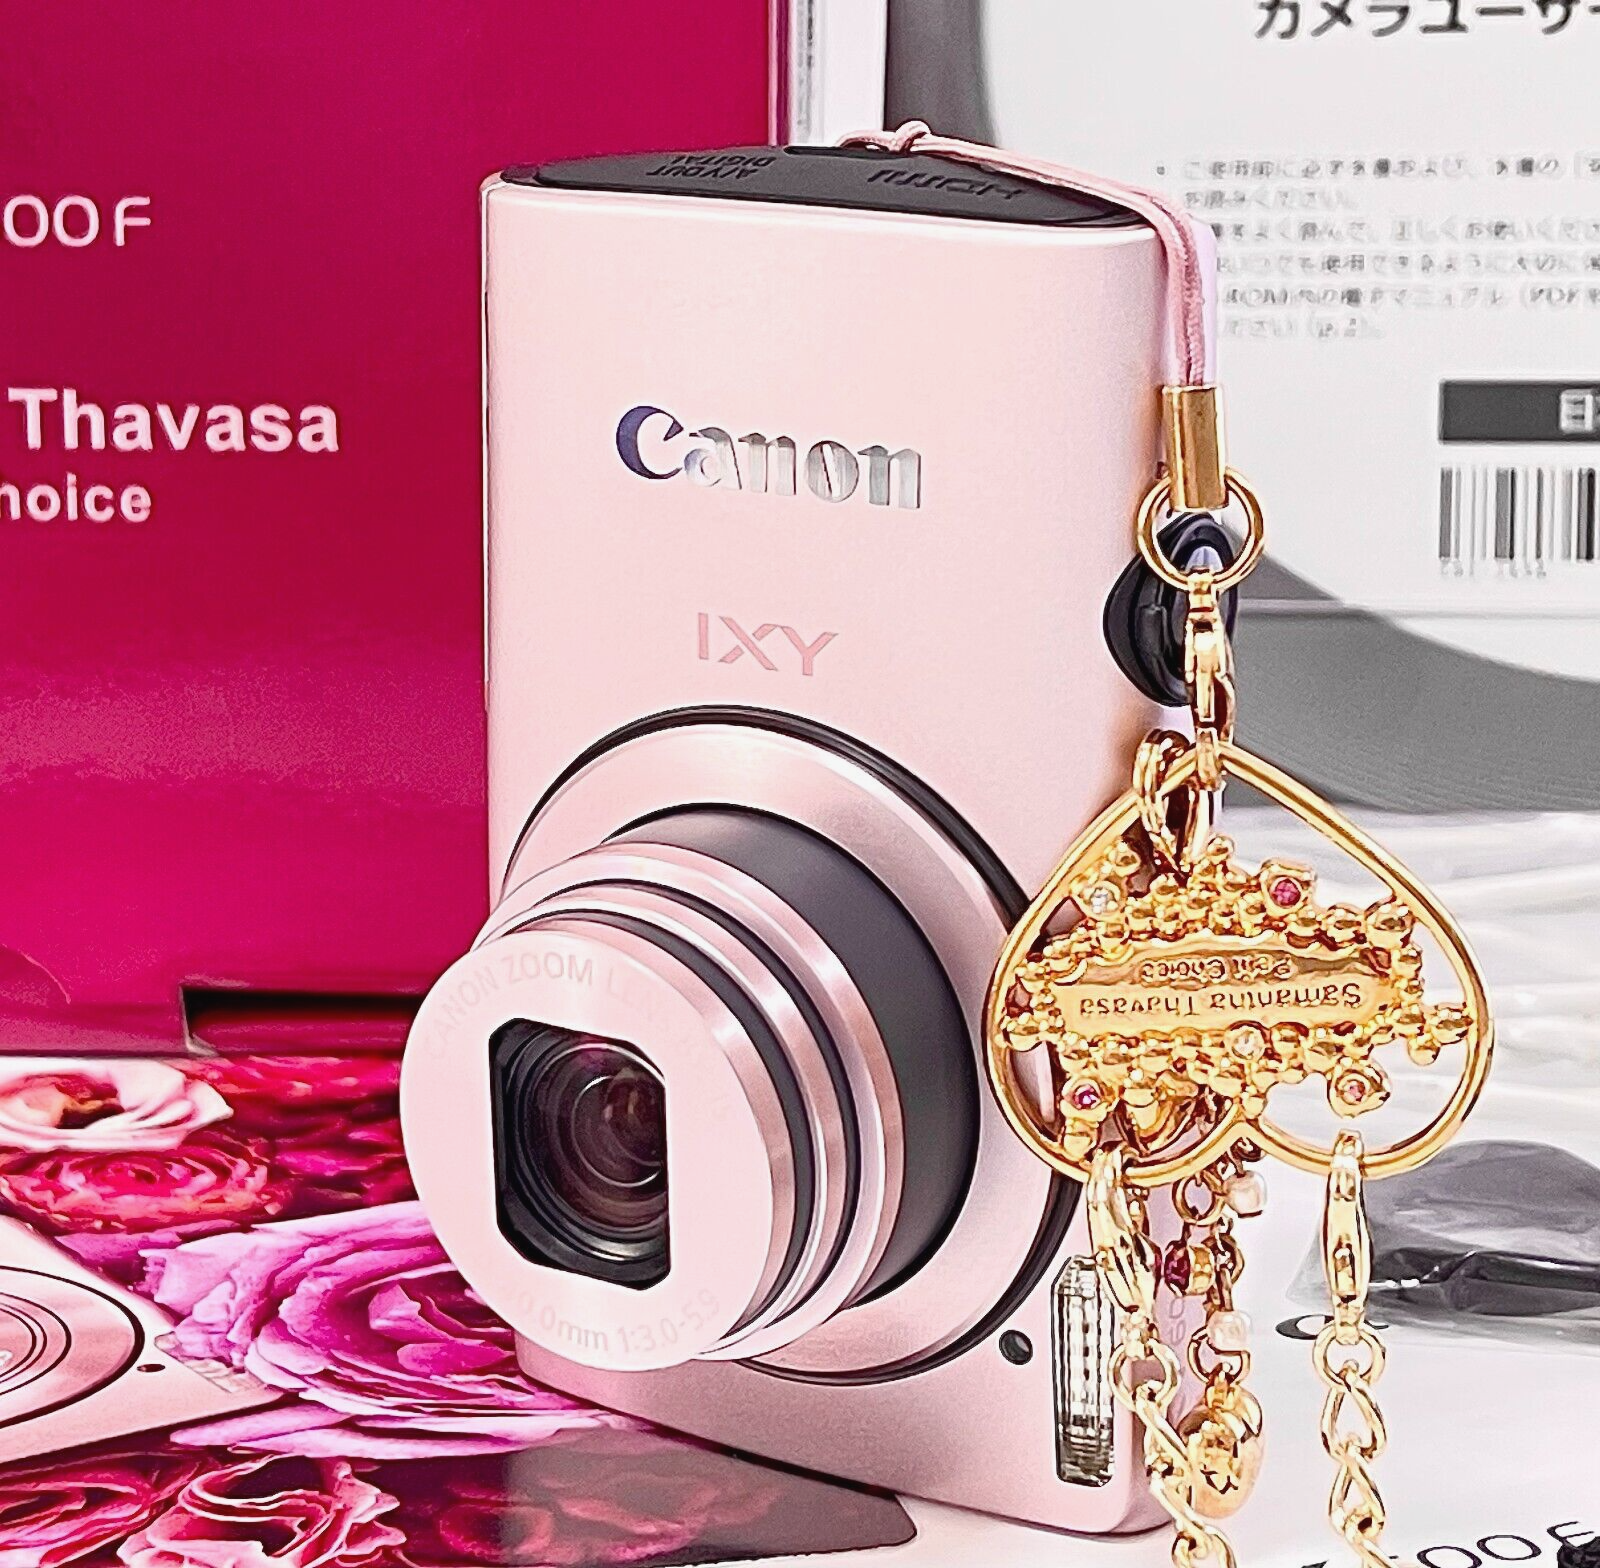 [Mint] Canon IXY 600F Samantha Thavasa Limit Digital camera Pink 12.1MP w/  Box